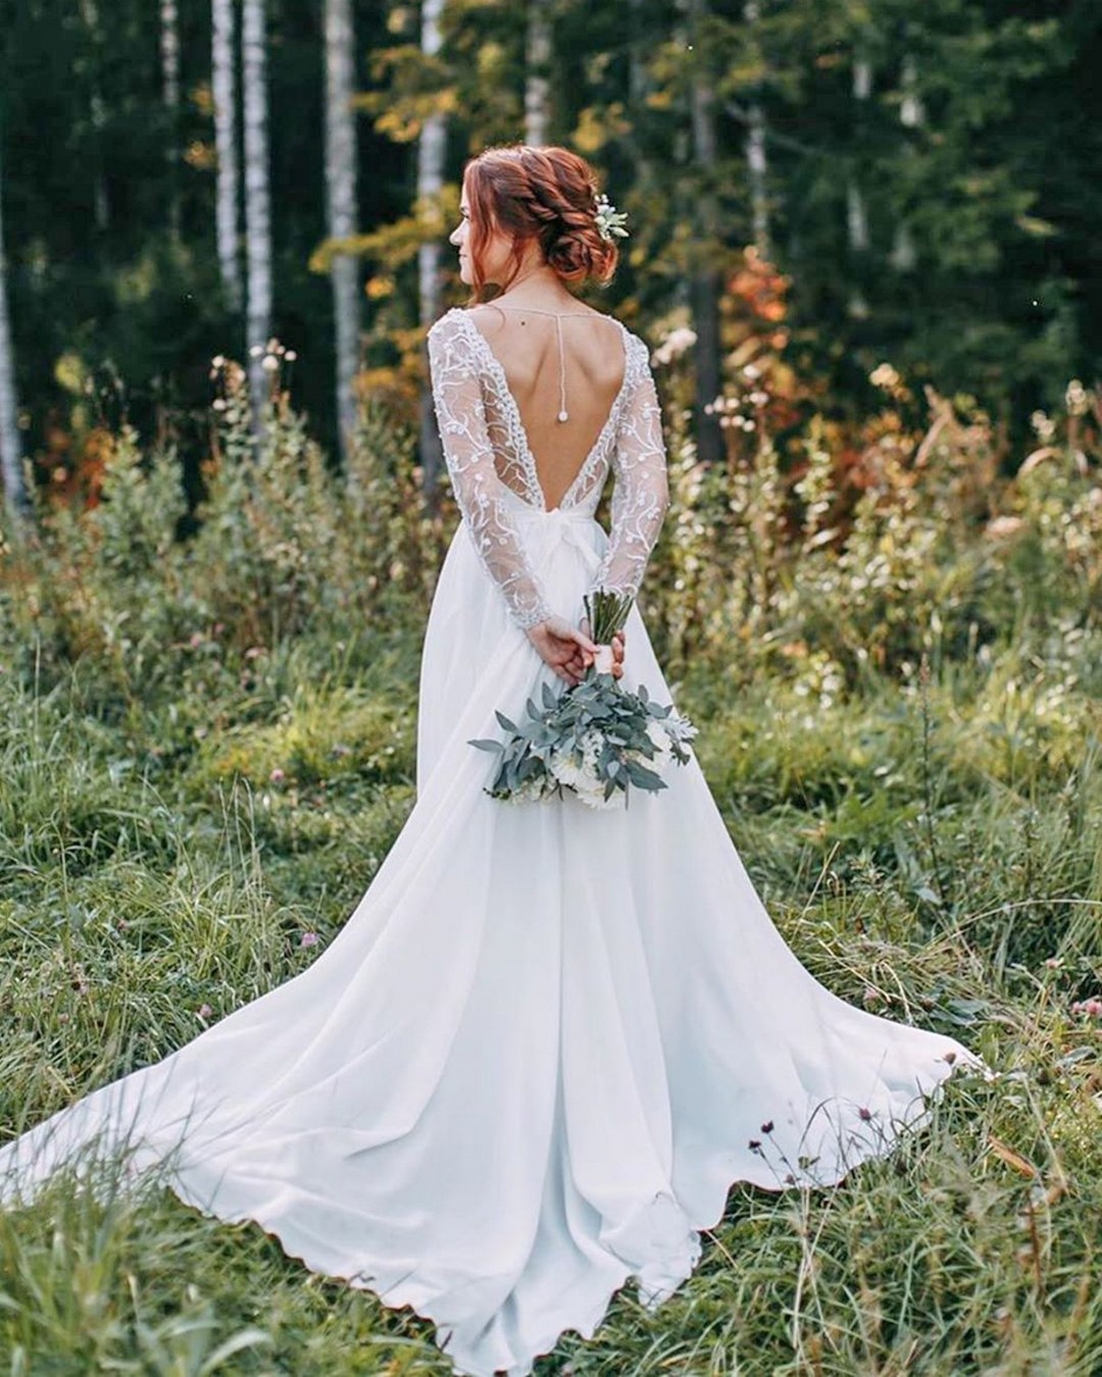 60 Gorgeous Casual Rustic Wedding Dress Ideas 58 – Style Female